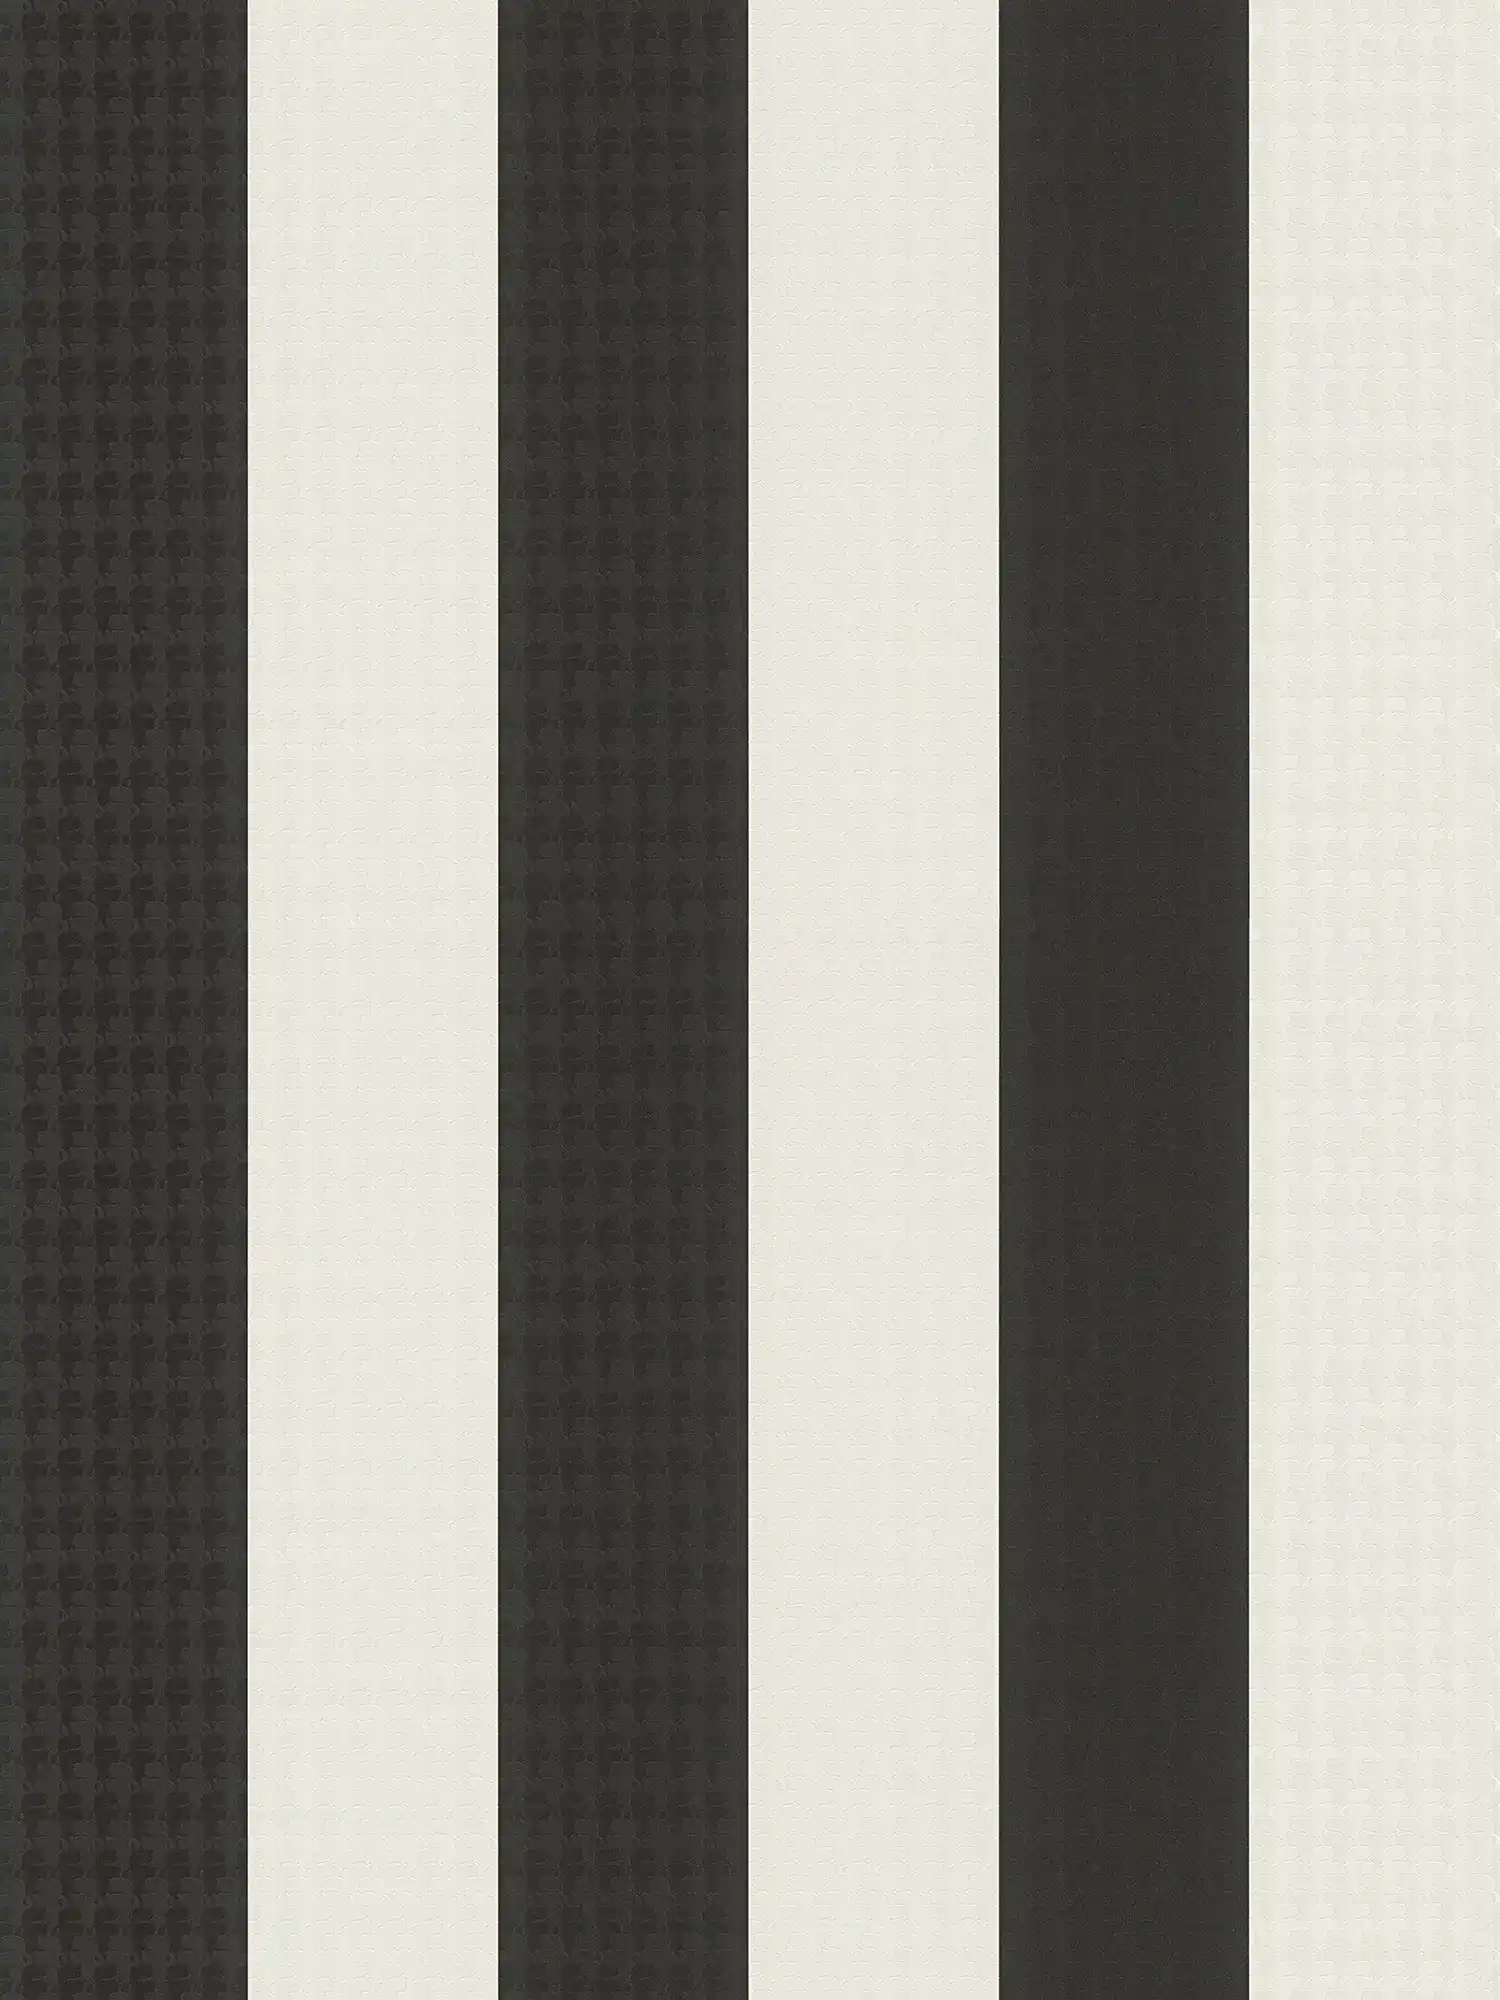 Wallpaper Karl LAGERFELD stripes & texture pattern - black, white
